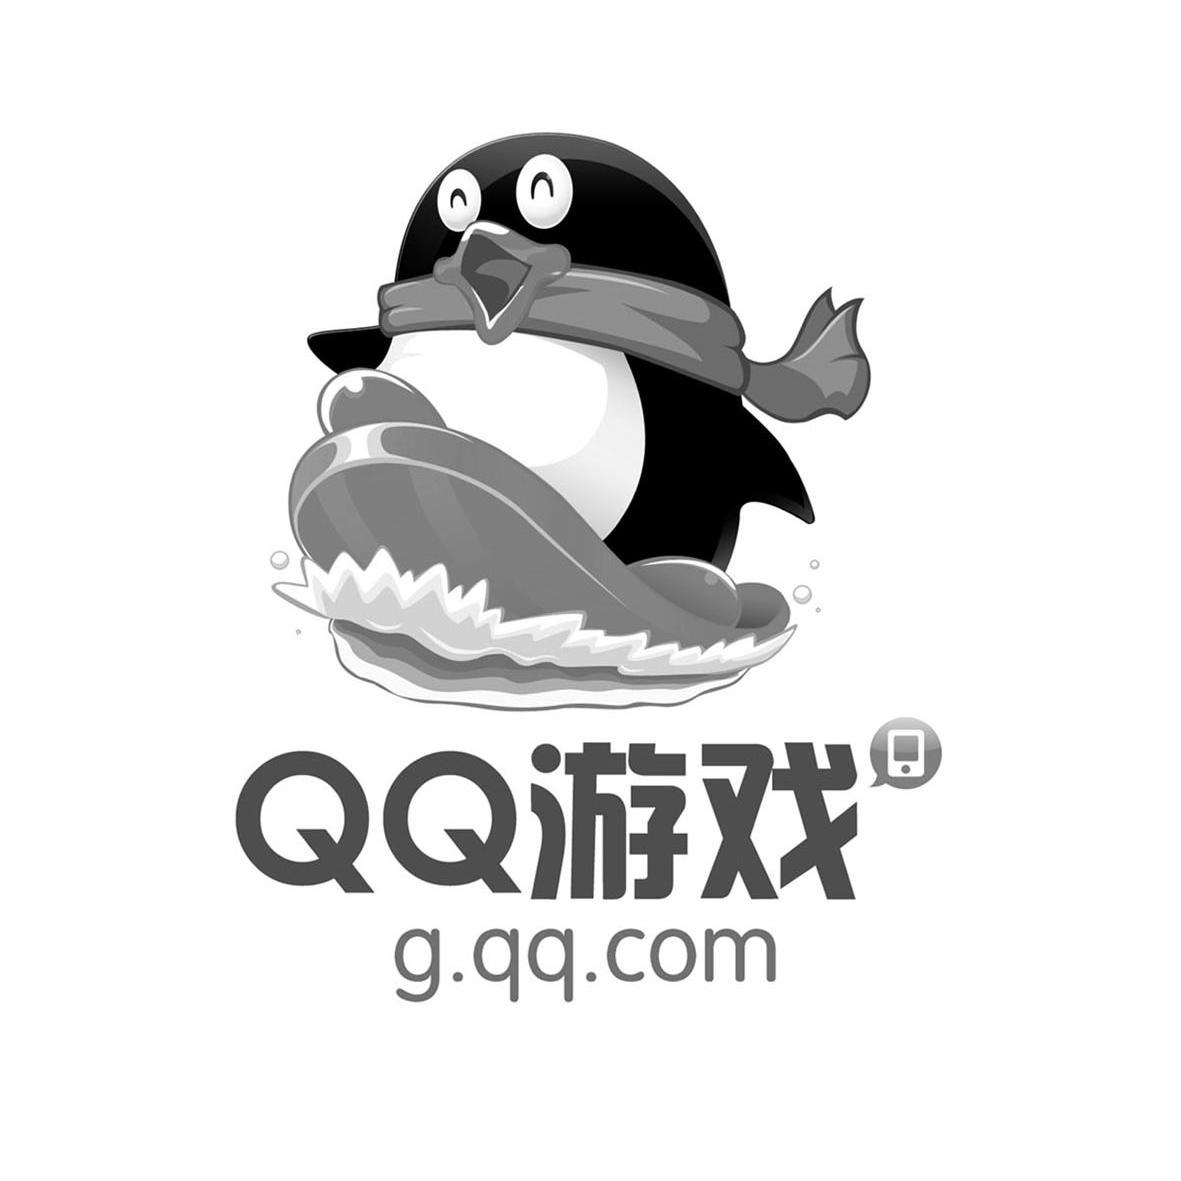 qq游戏 gqqcom 商标公告